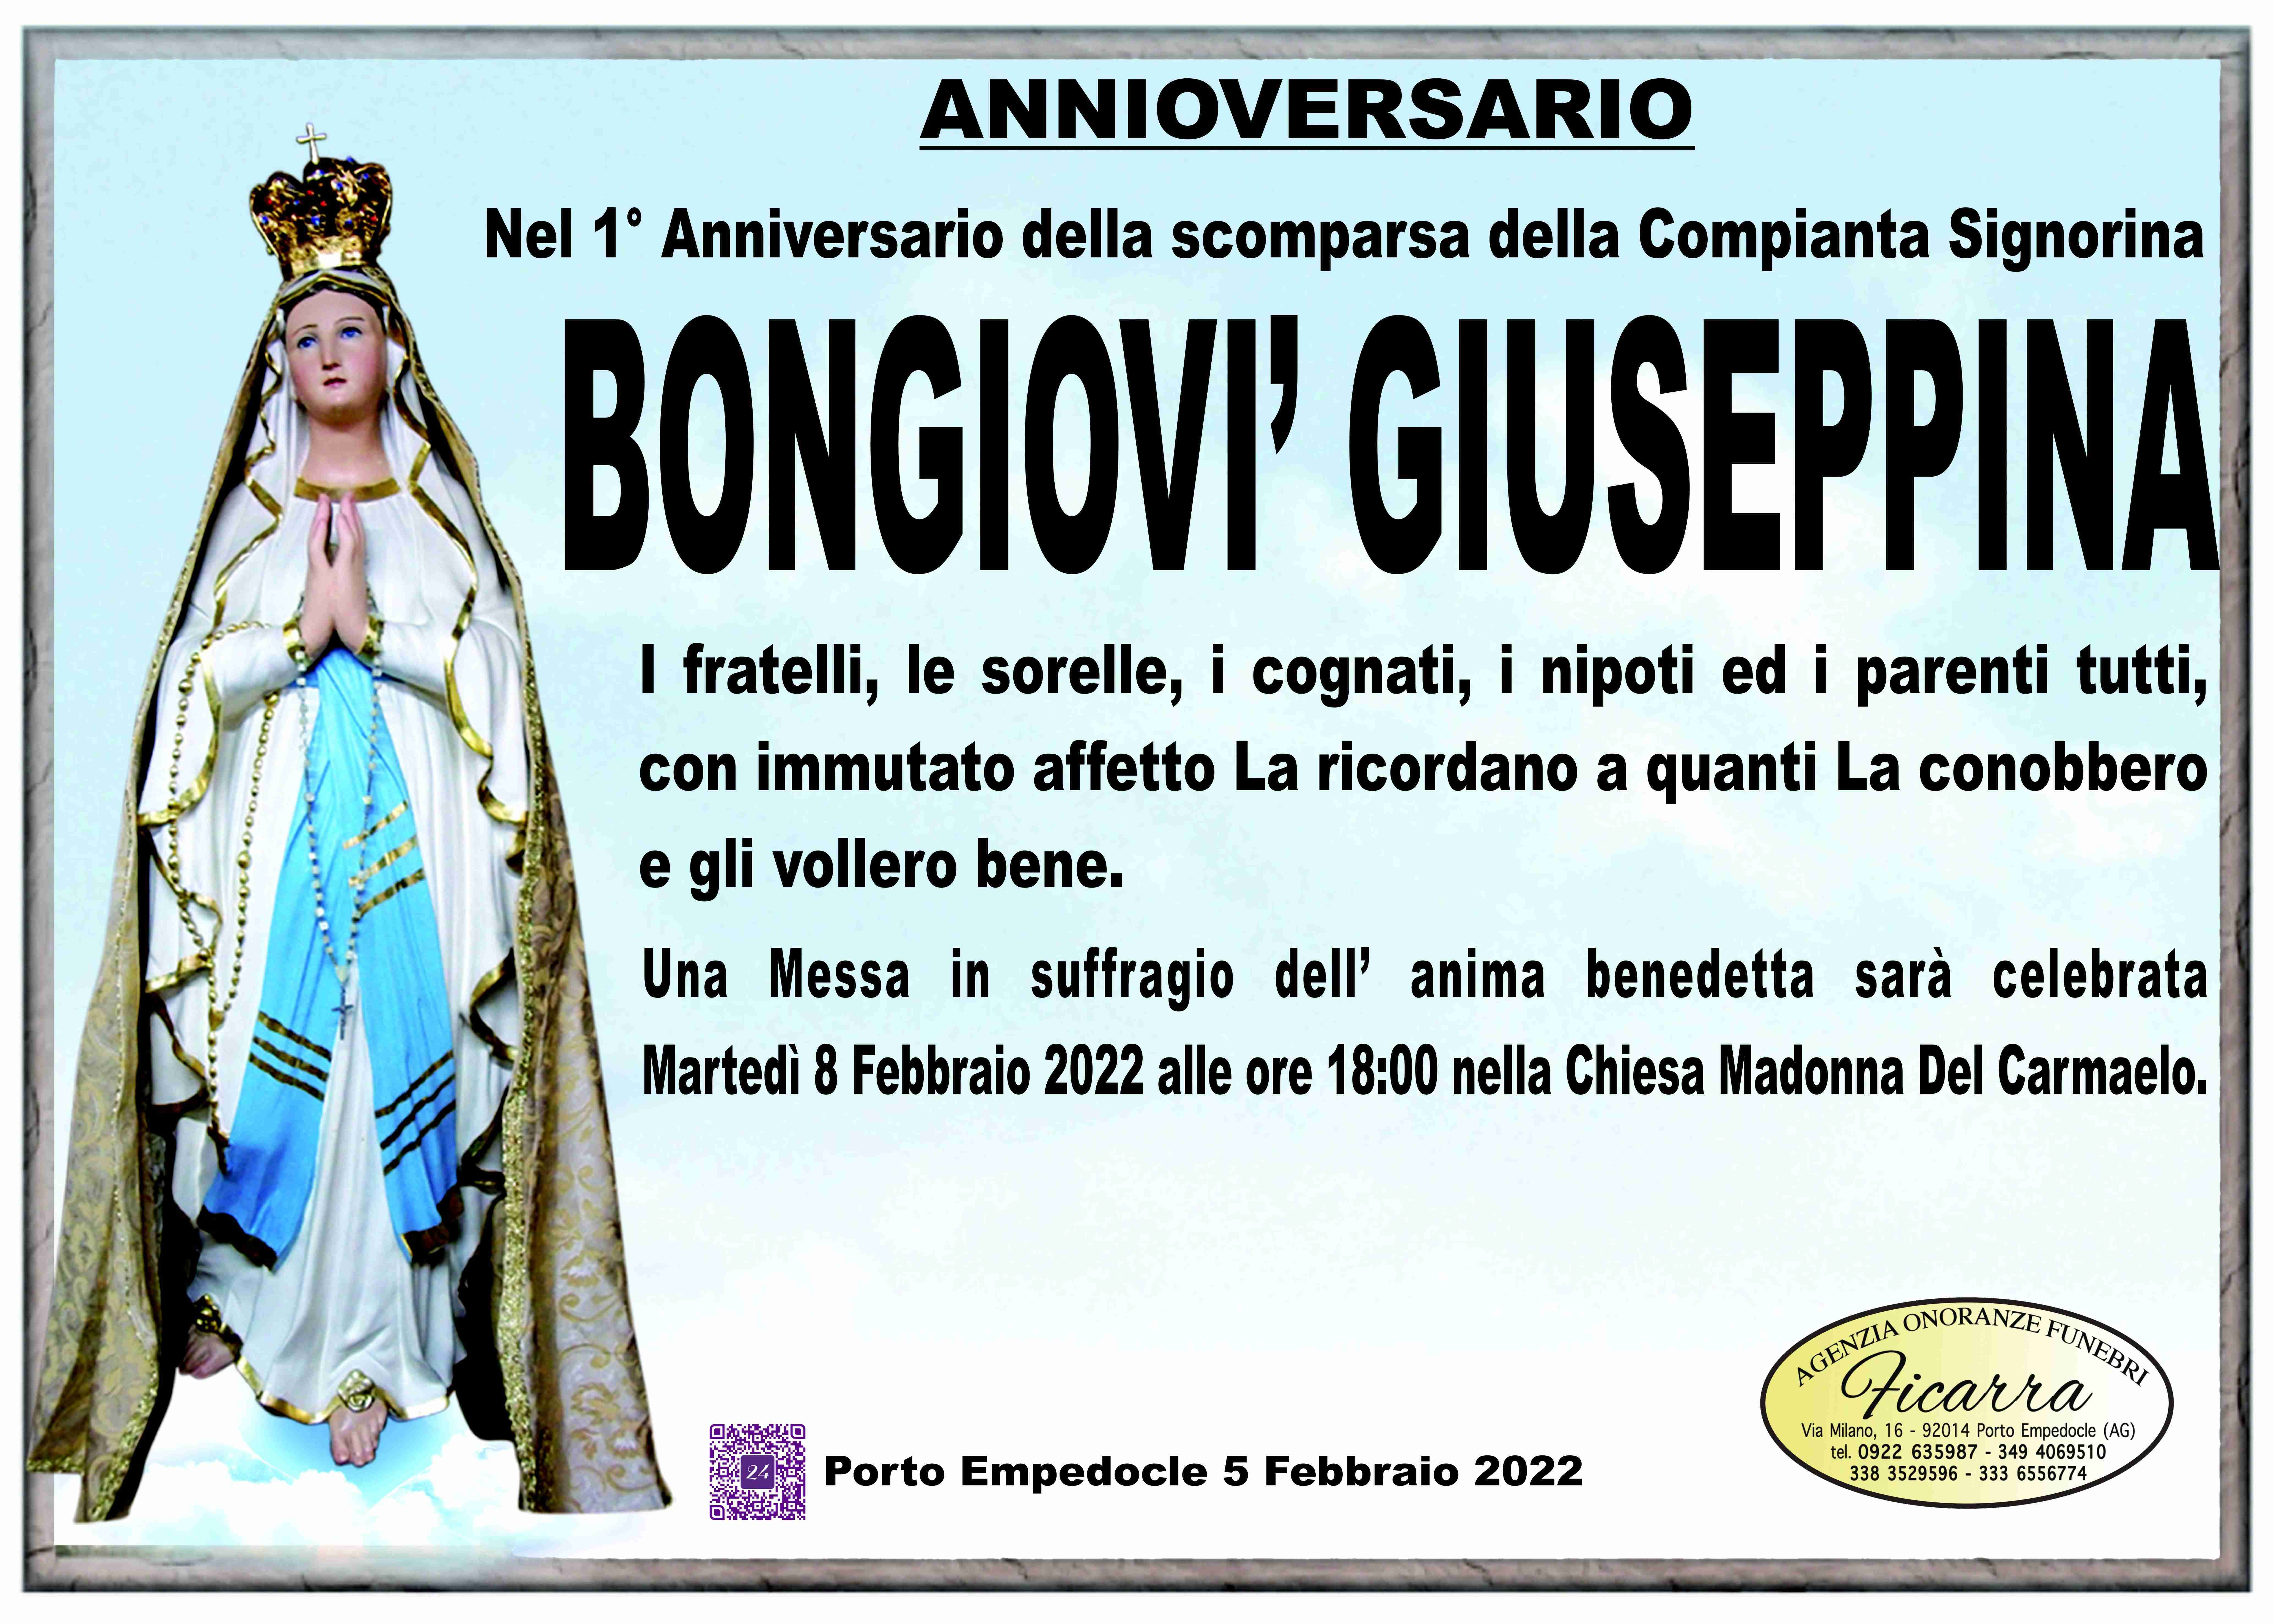 Giuseppina Bongiovì